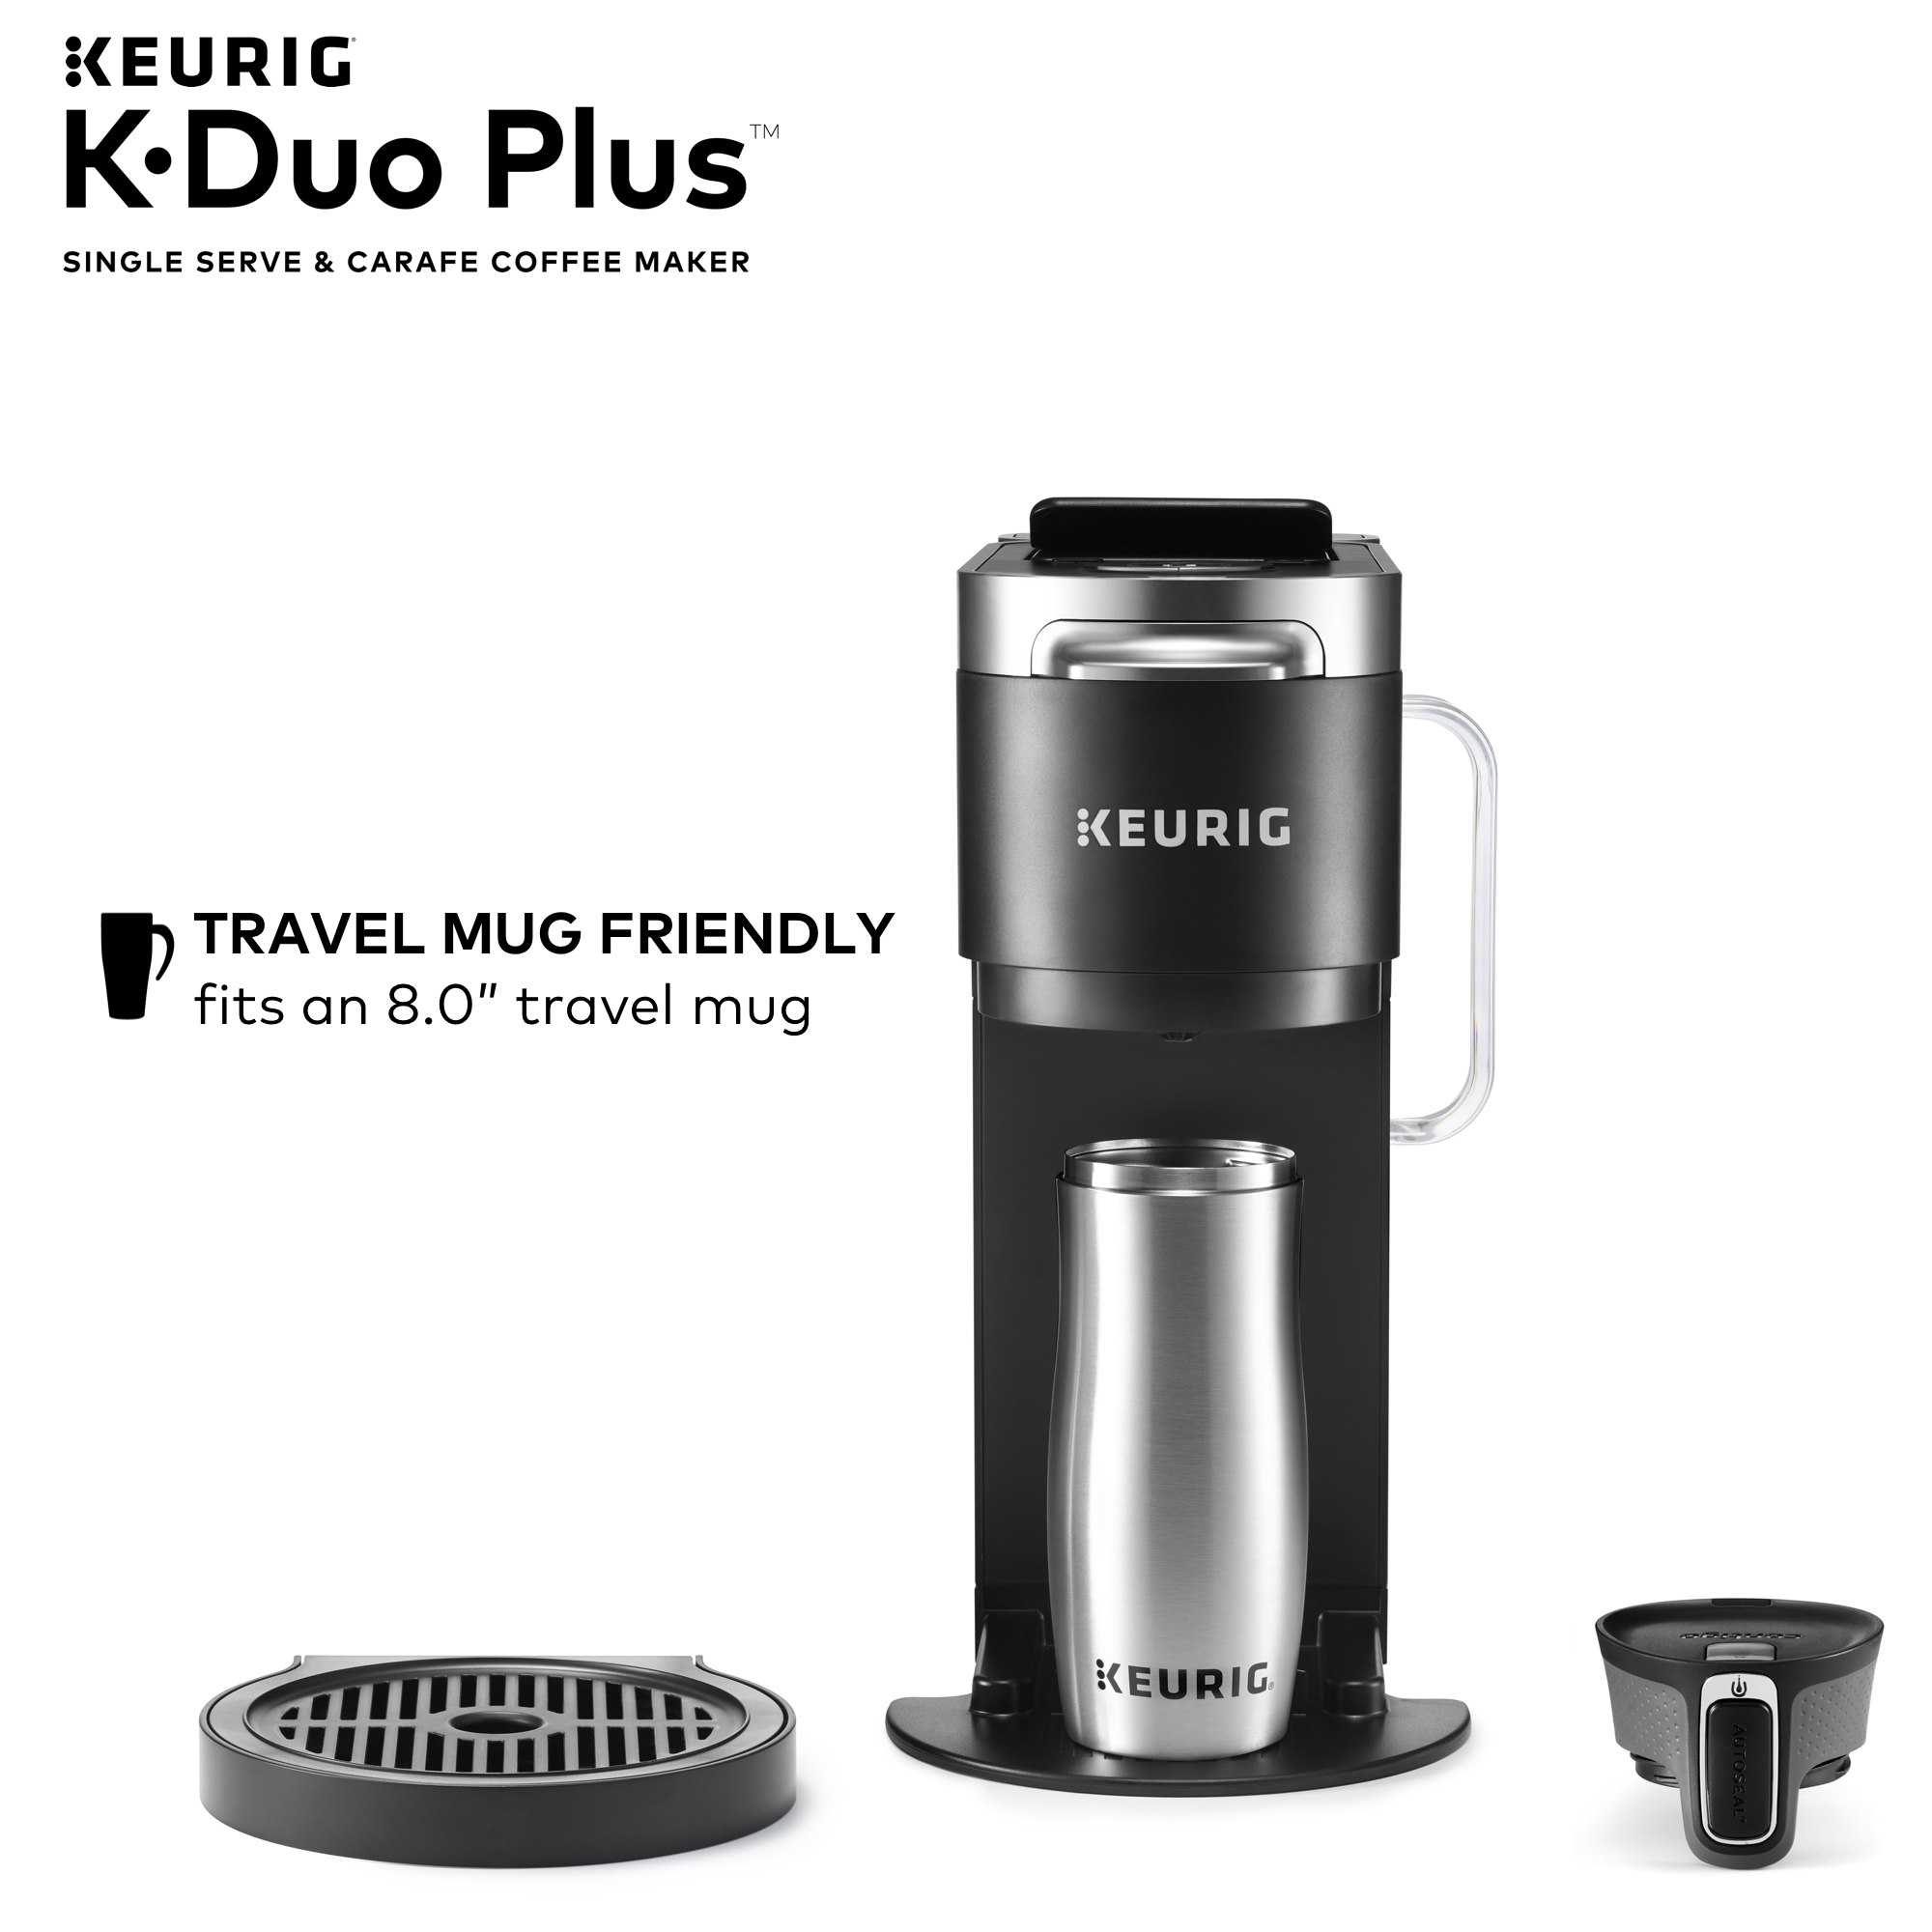 Keurig K-Duo Plus Single Serve & Carafe Coffee Maker - image 10 of 24